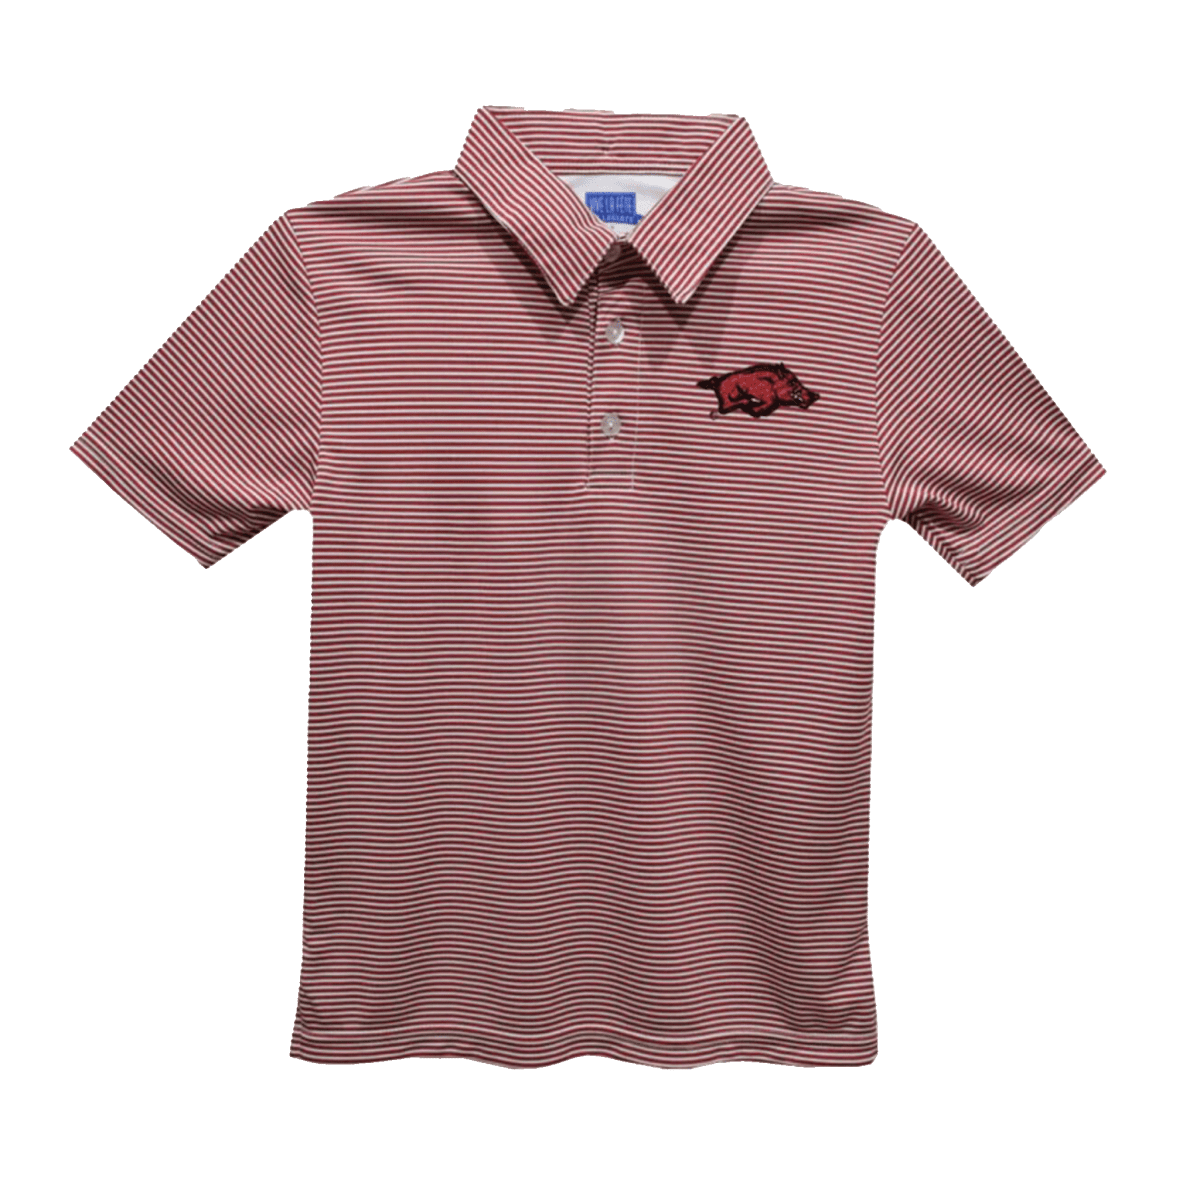 University of Arkansas Youth Stripes Short Sleeve Polo Box Shirt - Shop B-Unlimited